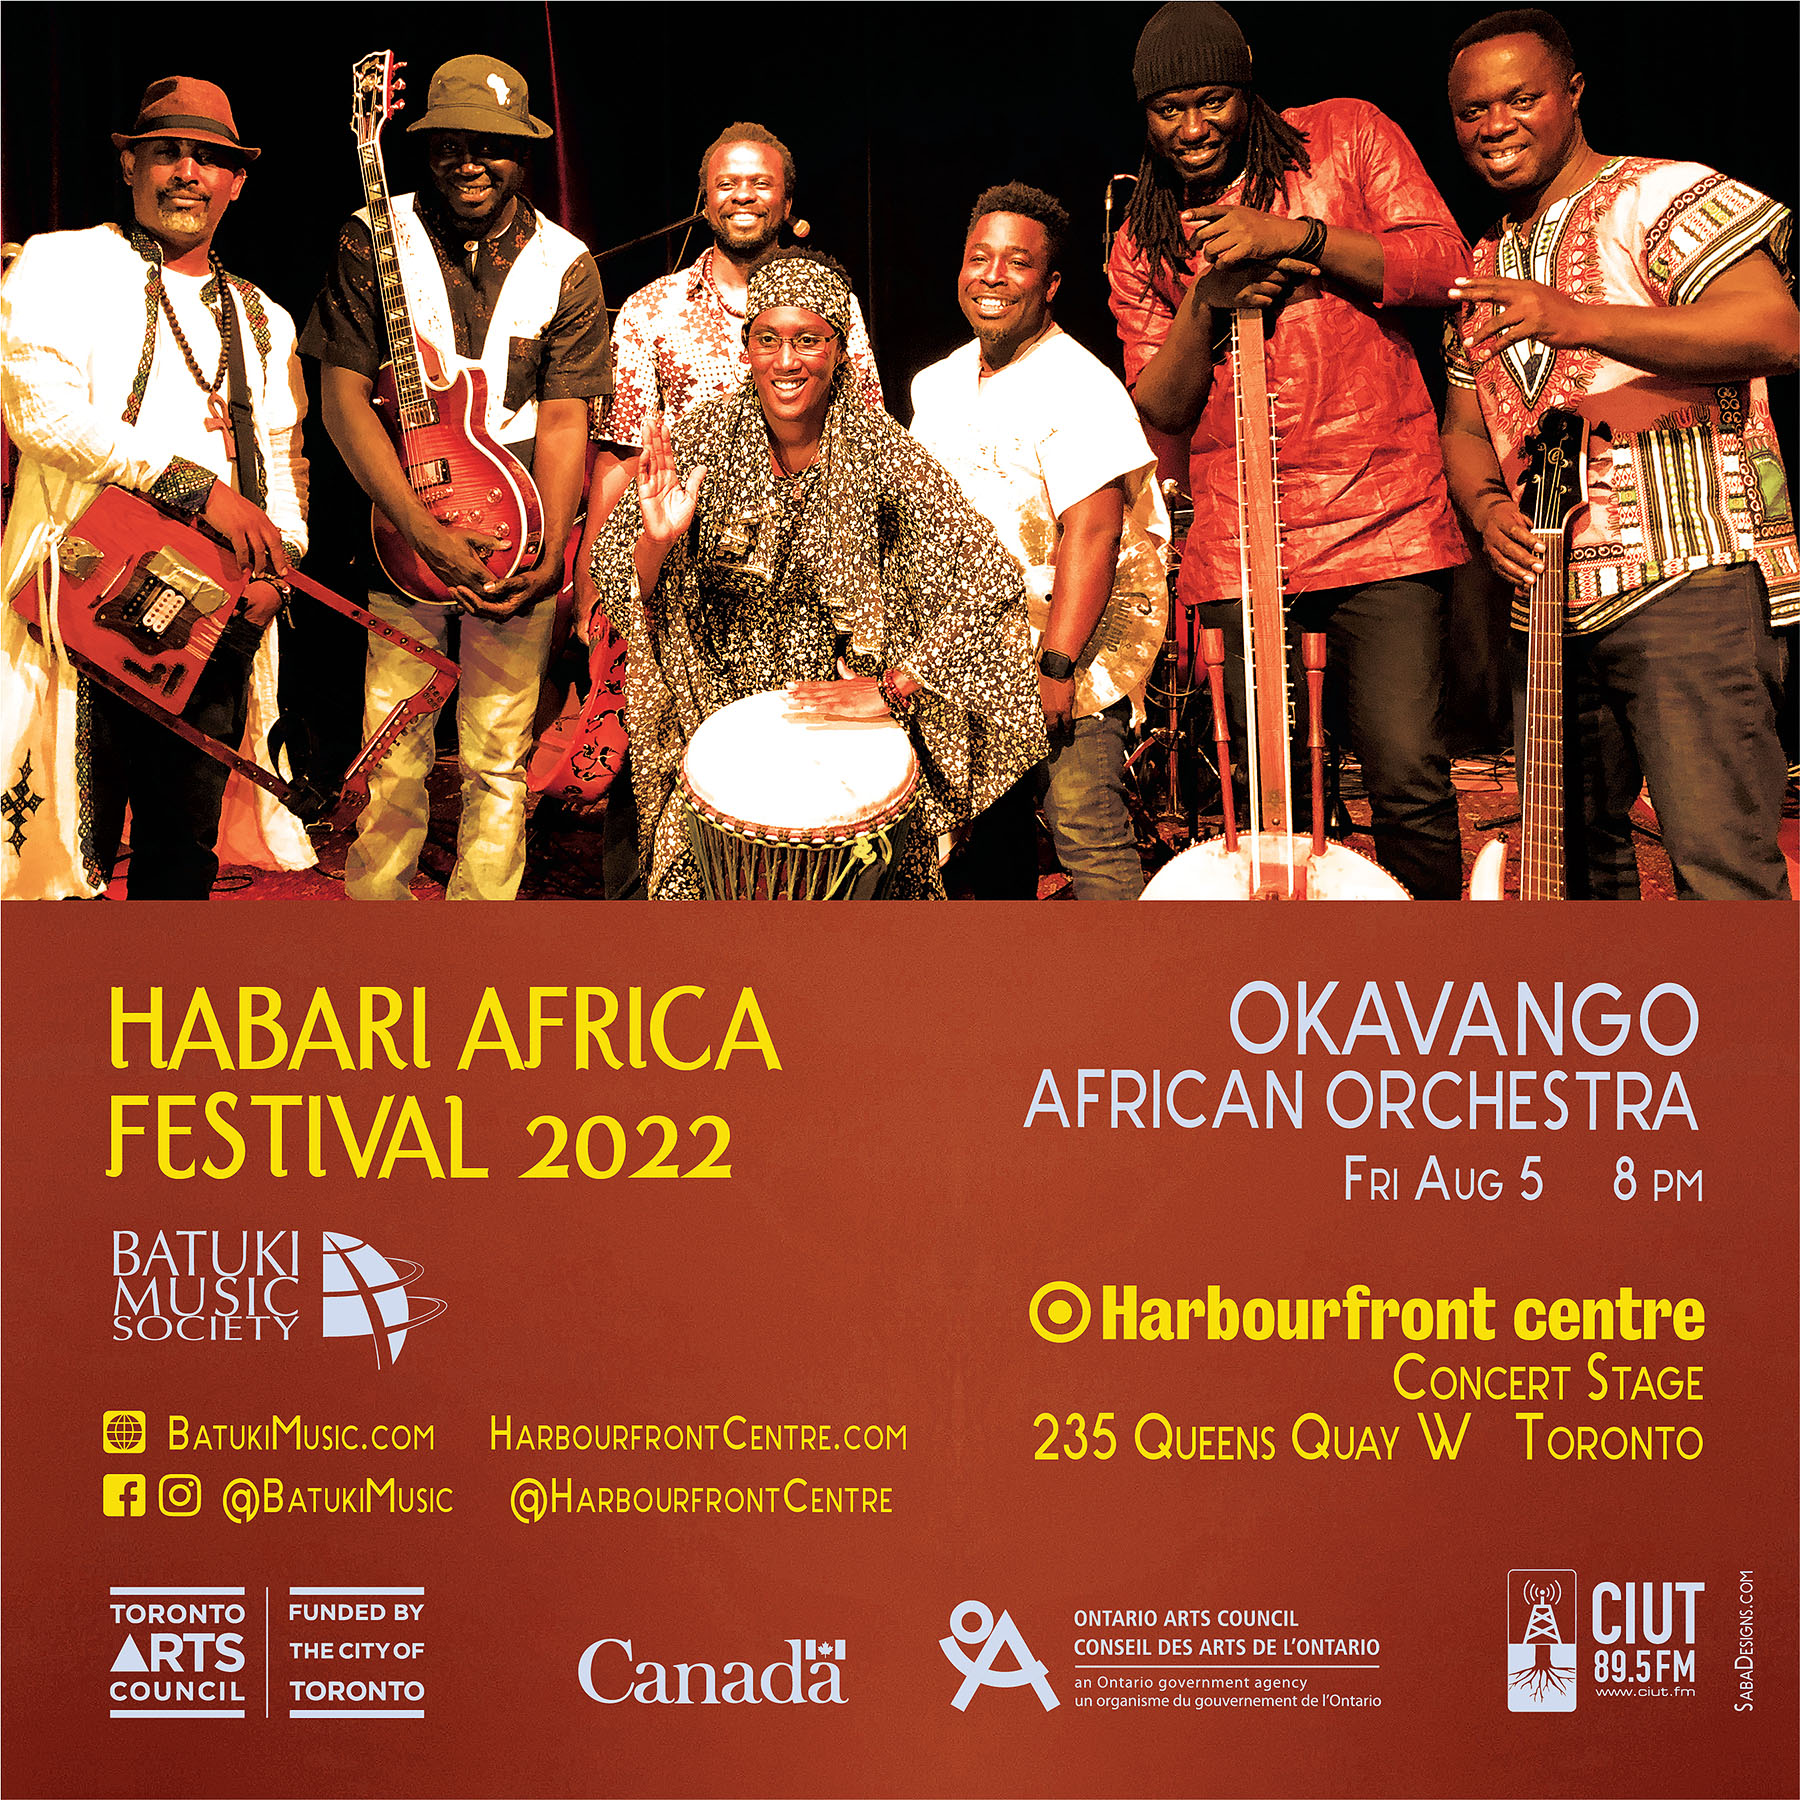 Habari Africa Live Festival 2022 by Batuki Music Society Okavango